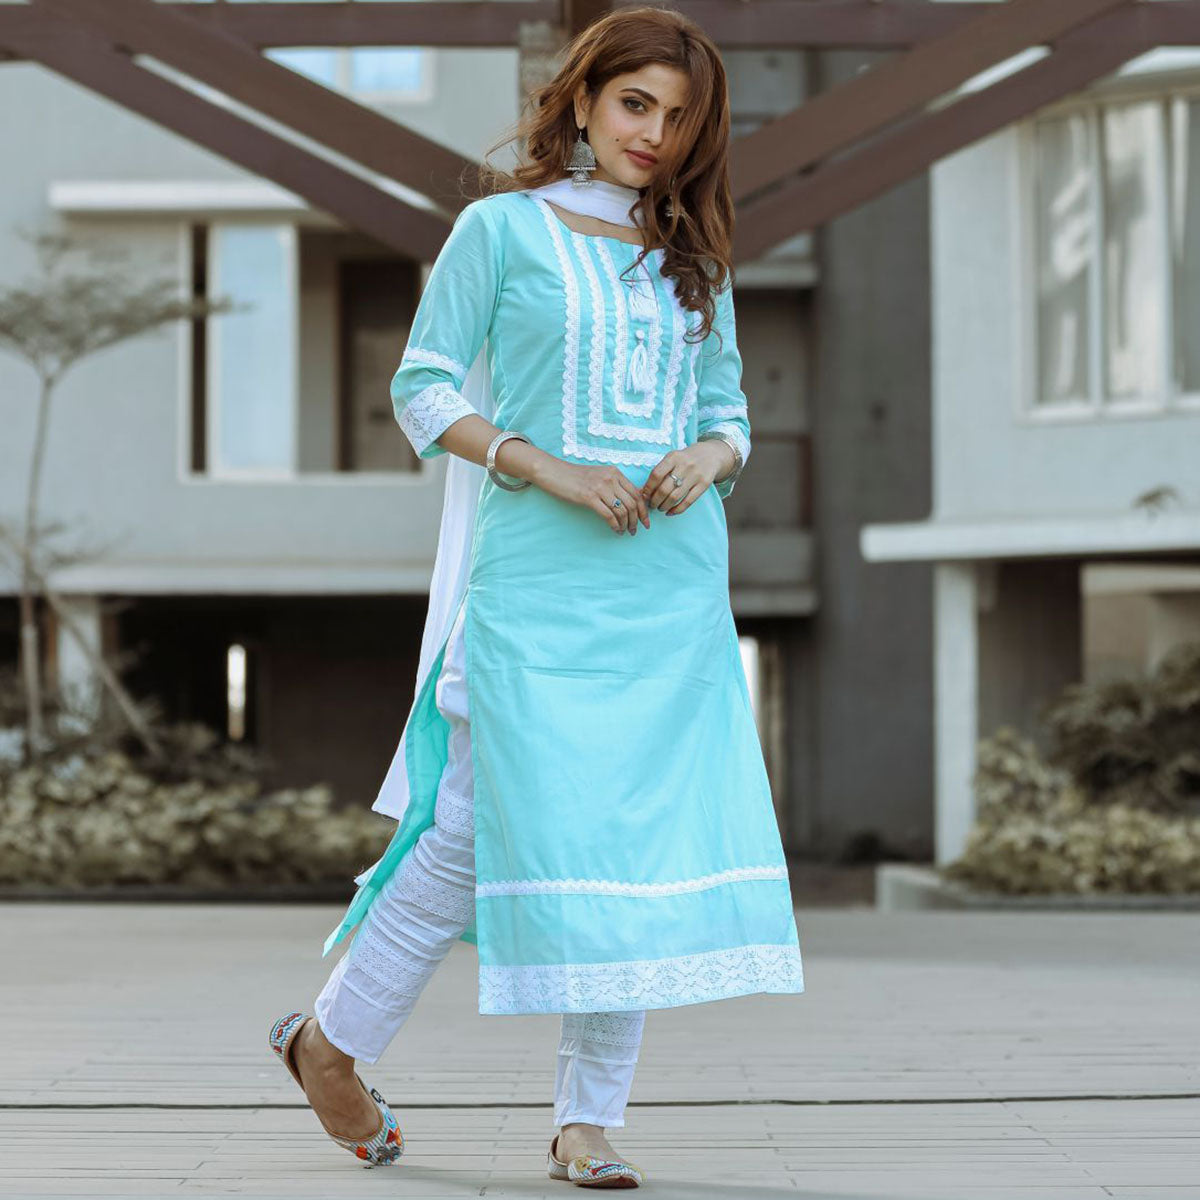 Female Synthic Readymade Kids Punjabi Suit at Rs 900/set in Jalandhar | ID:  20020983262